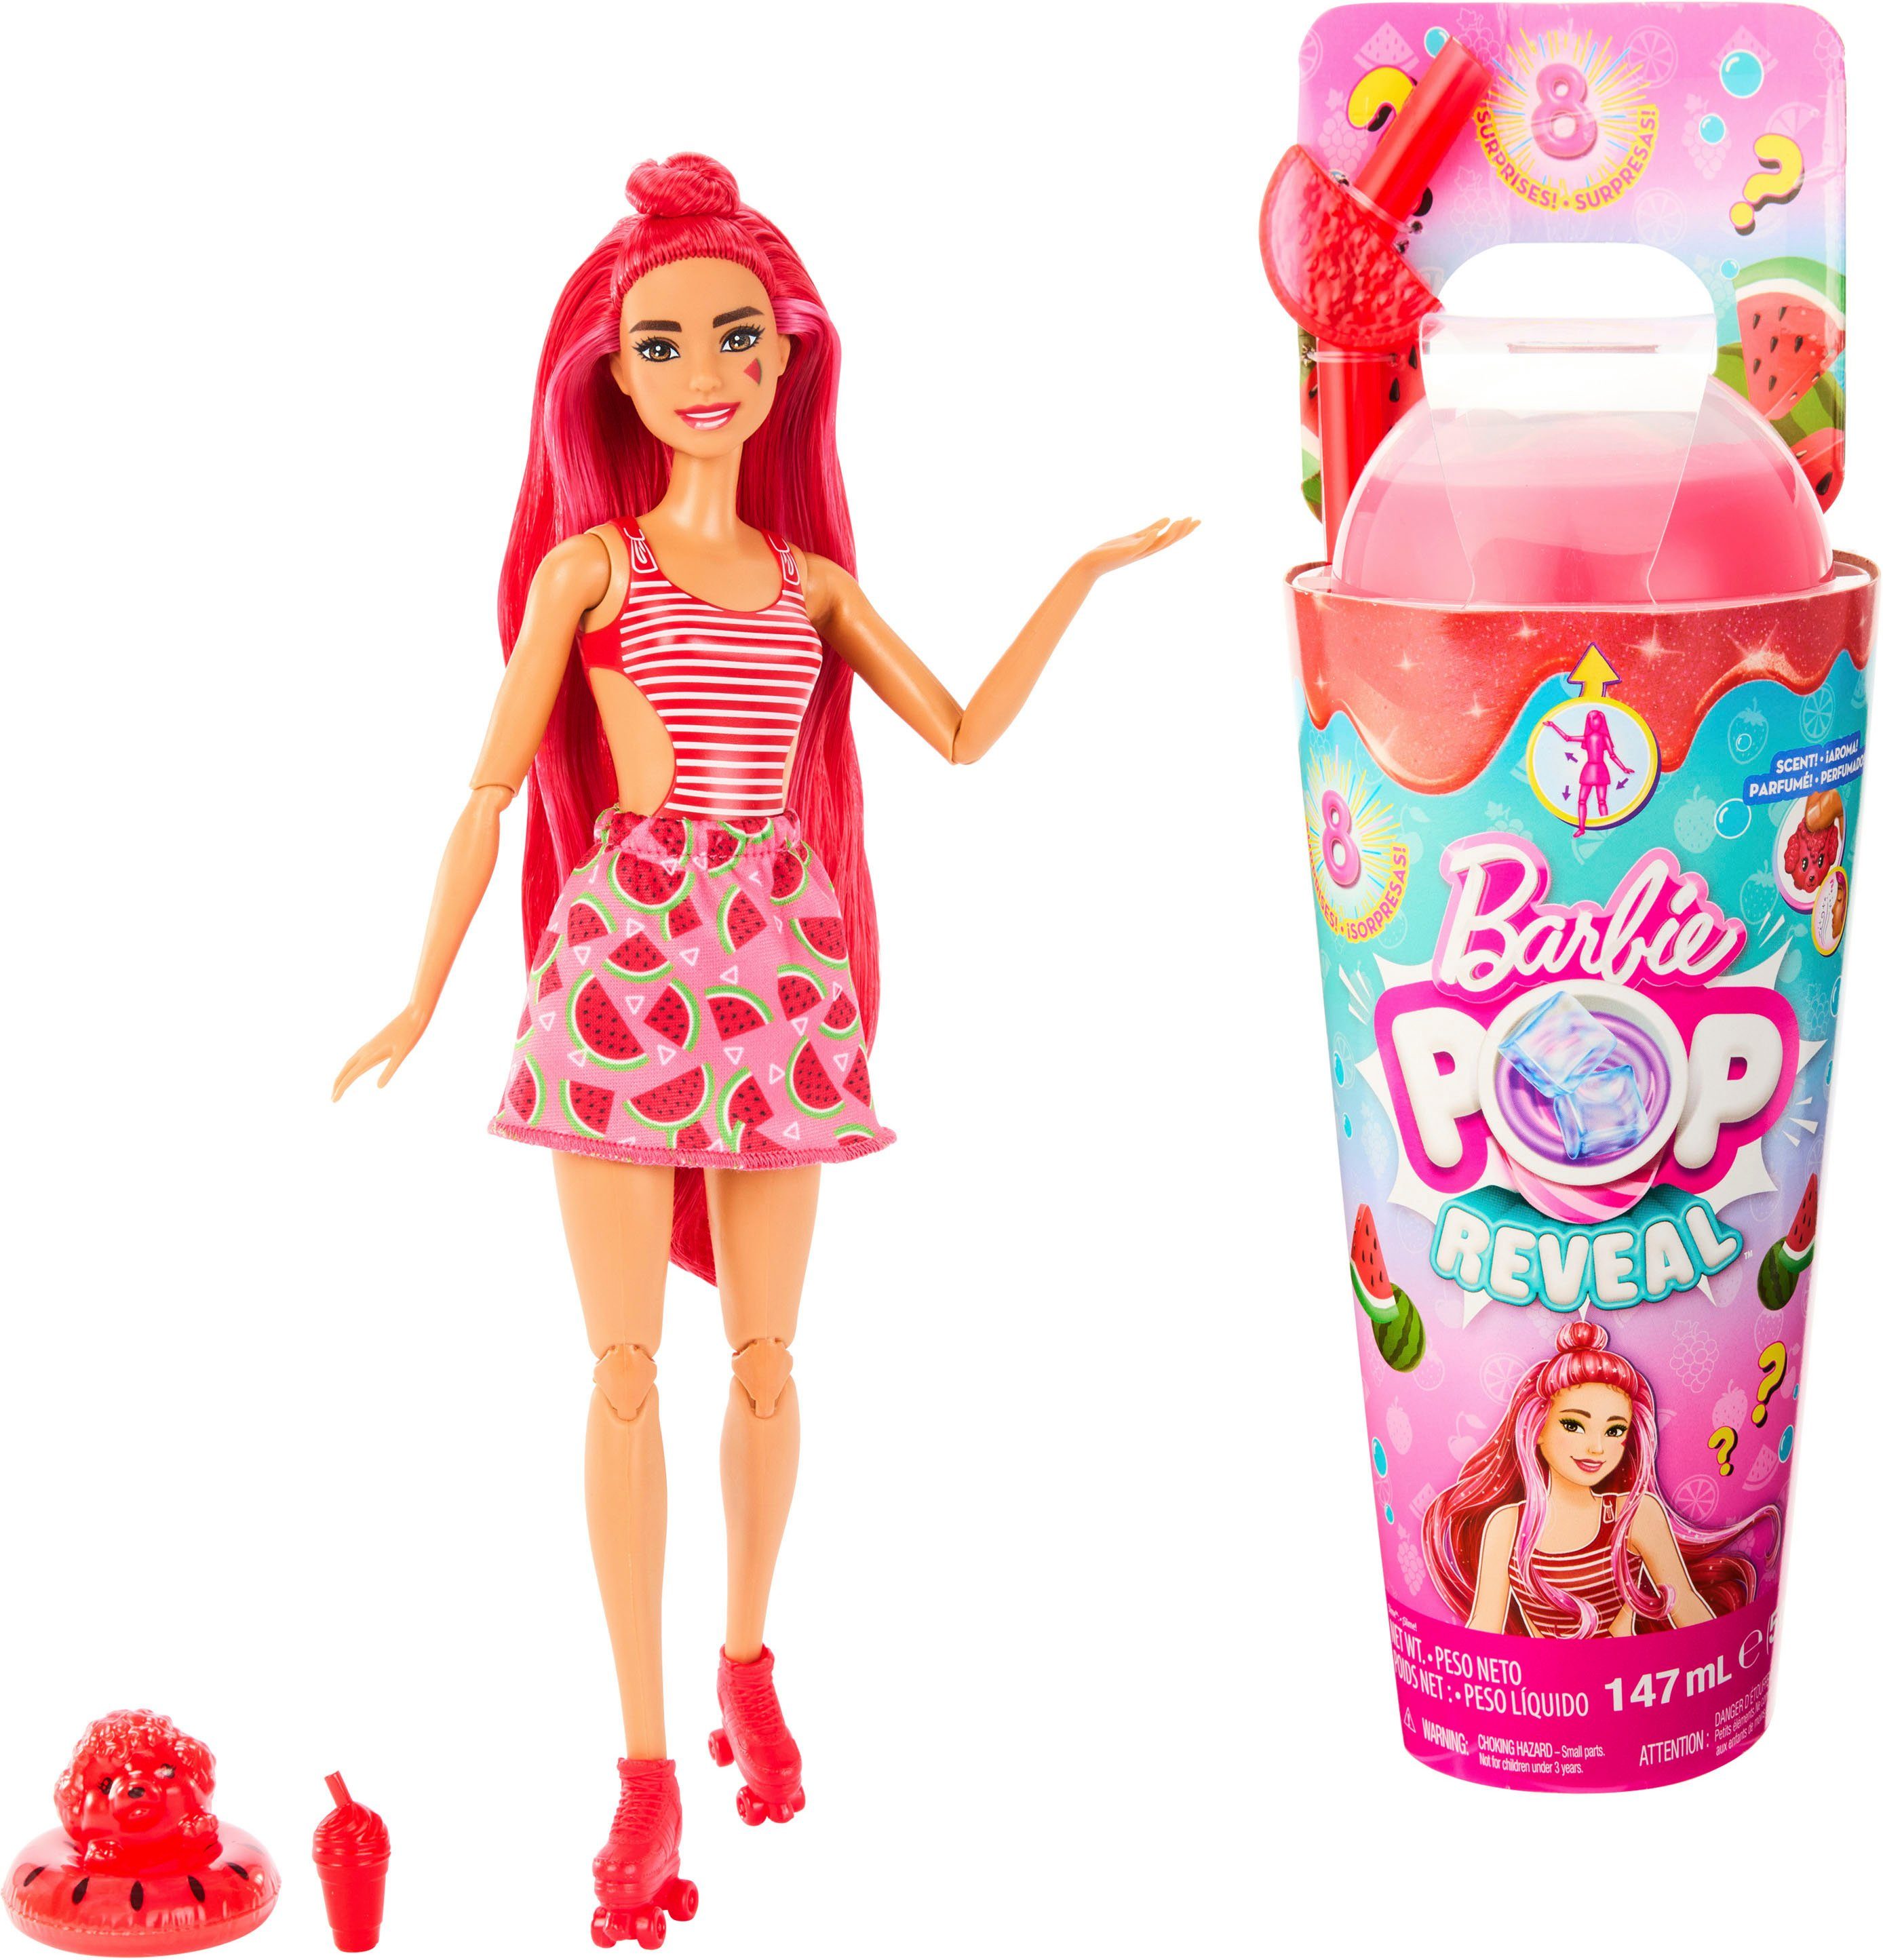 Fruit, Pop! Barbie Farbwechsel Reveal, Anziehpuppe Wassermelonendesign, mit